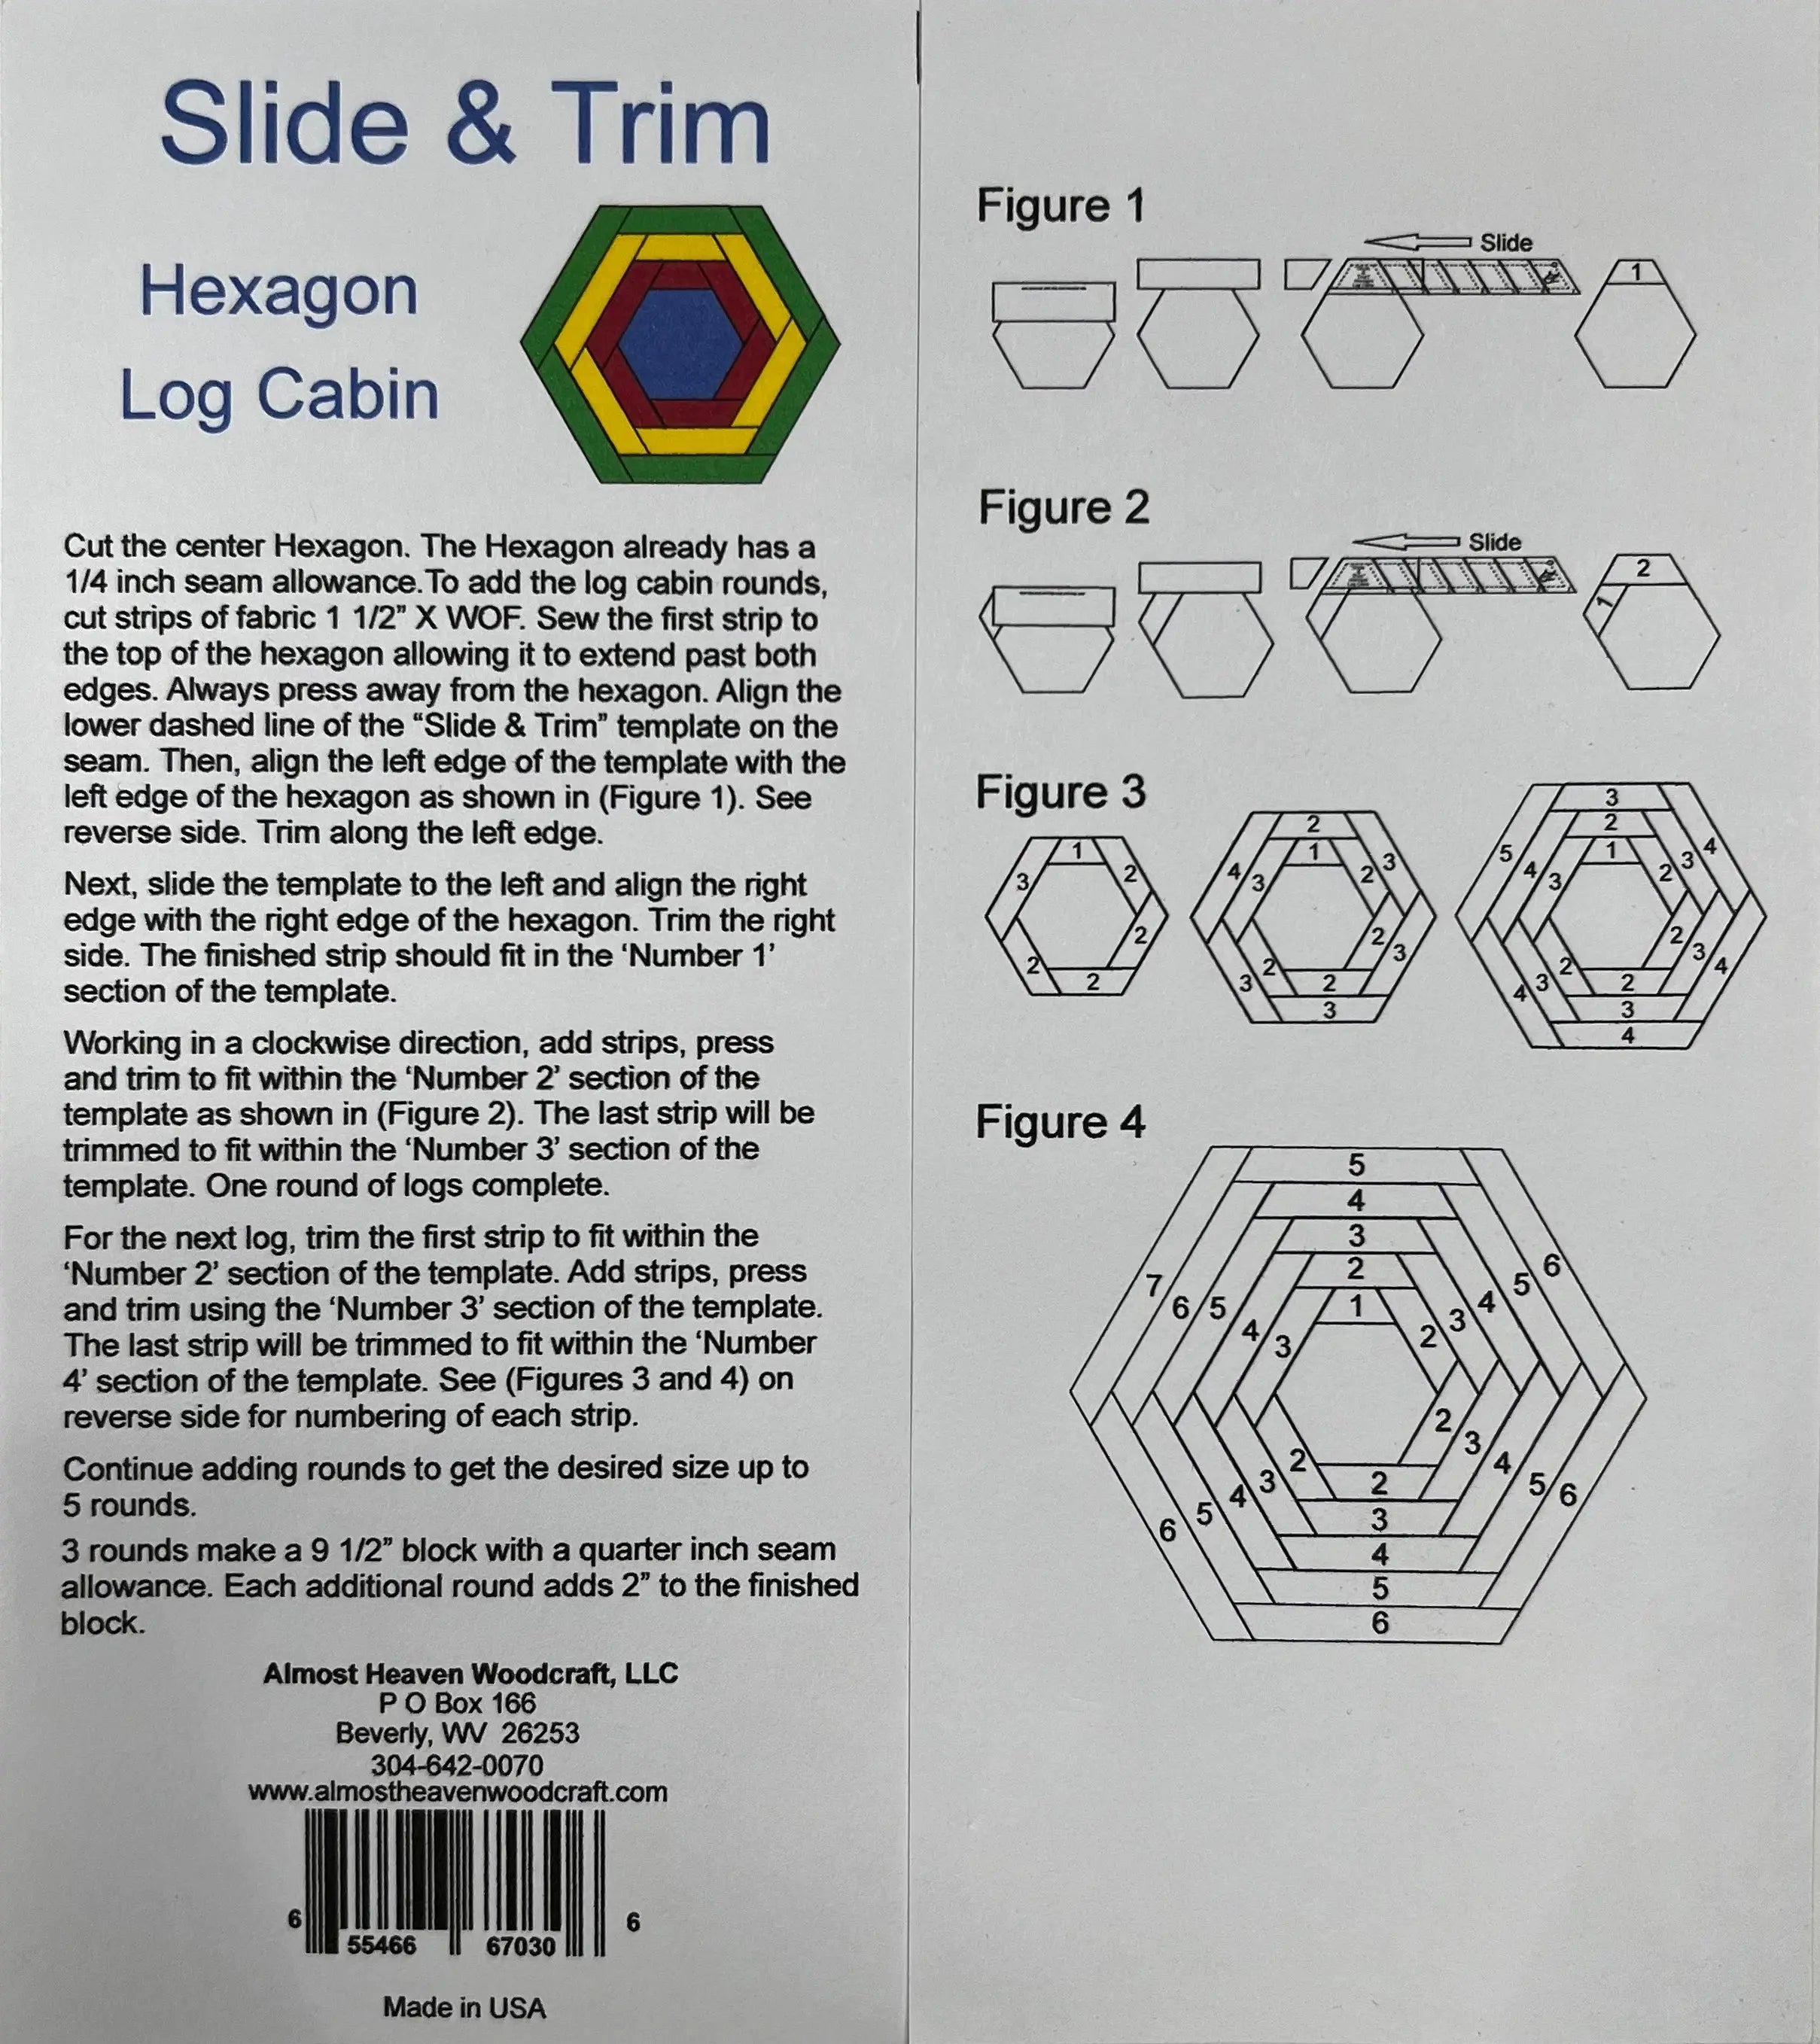 Slide & Trim Hexagon Log Cabin Template - Linda's Electric Quilters